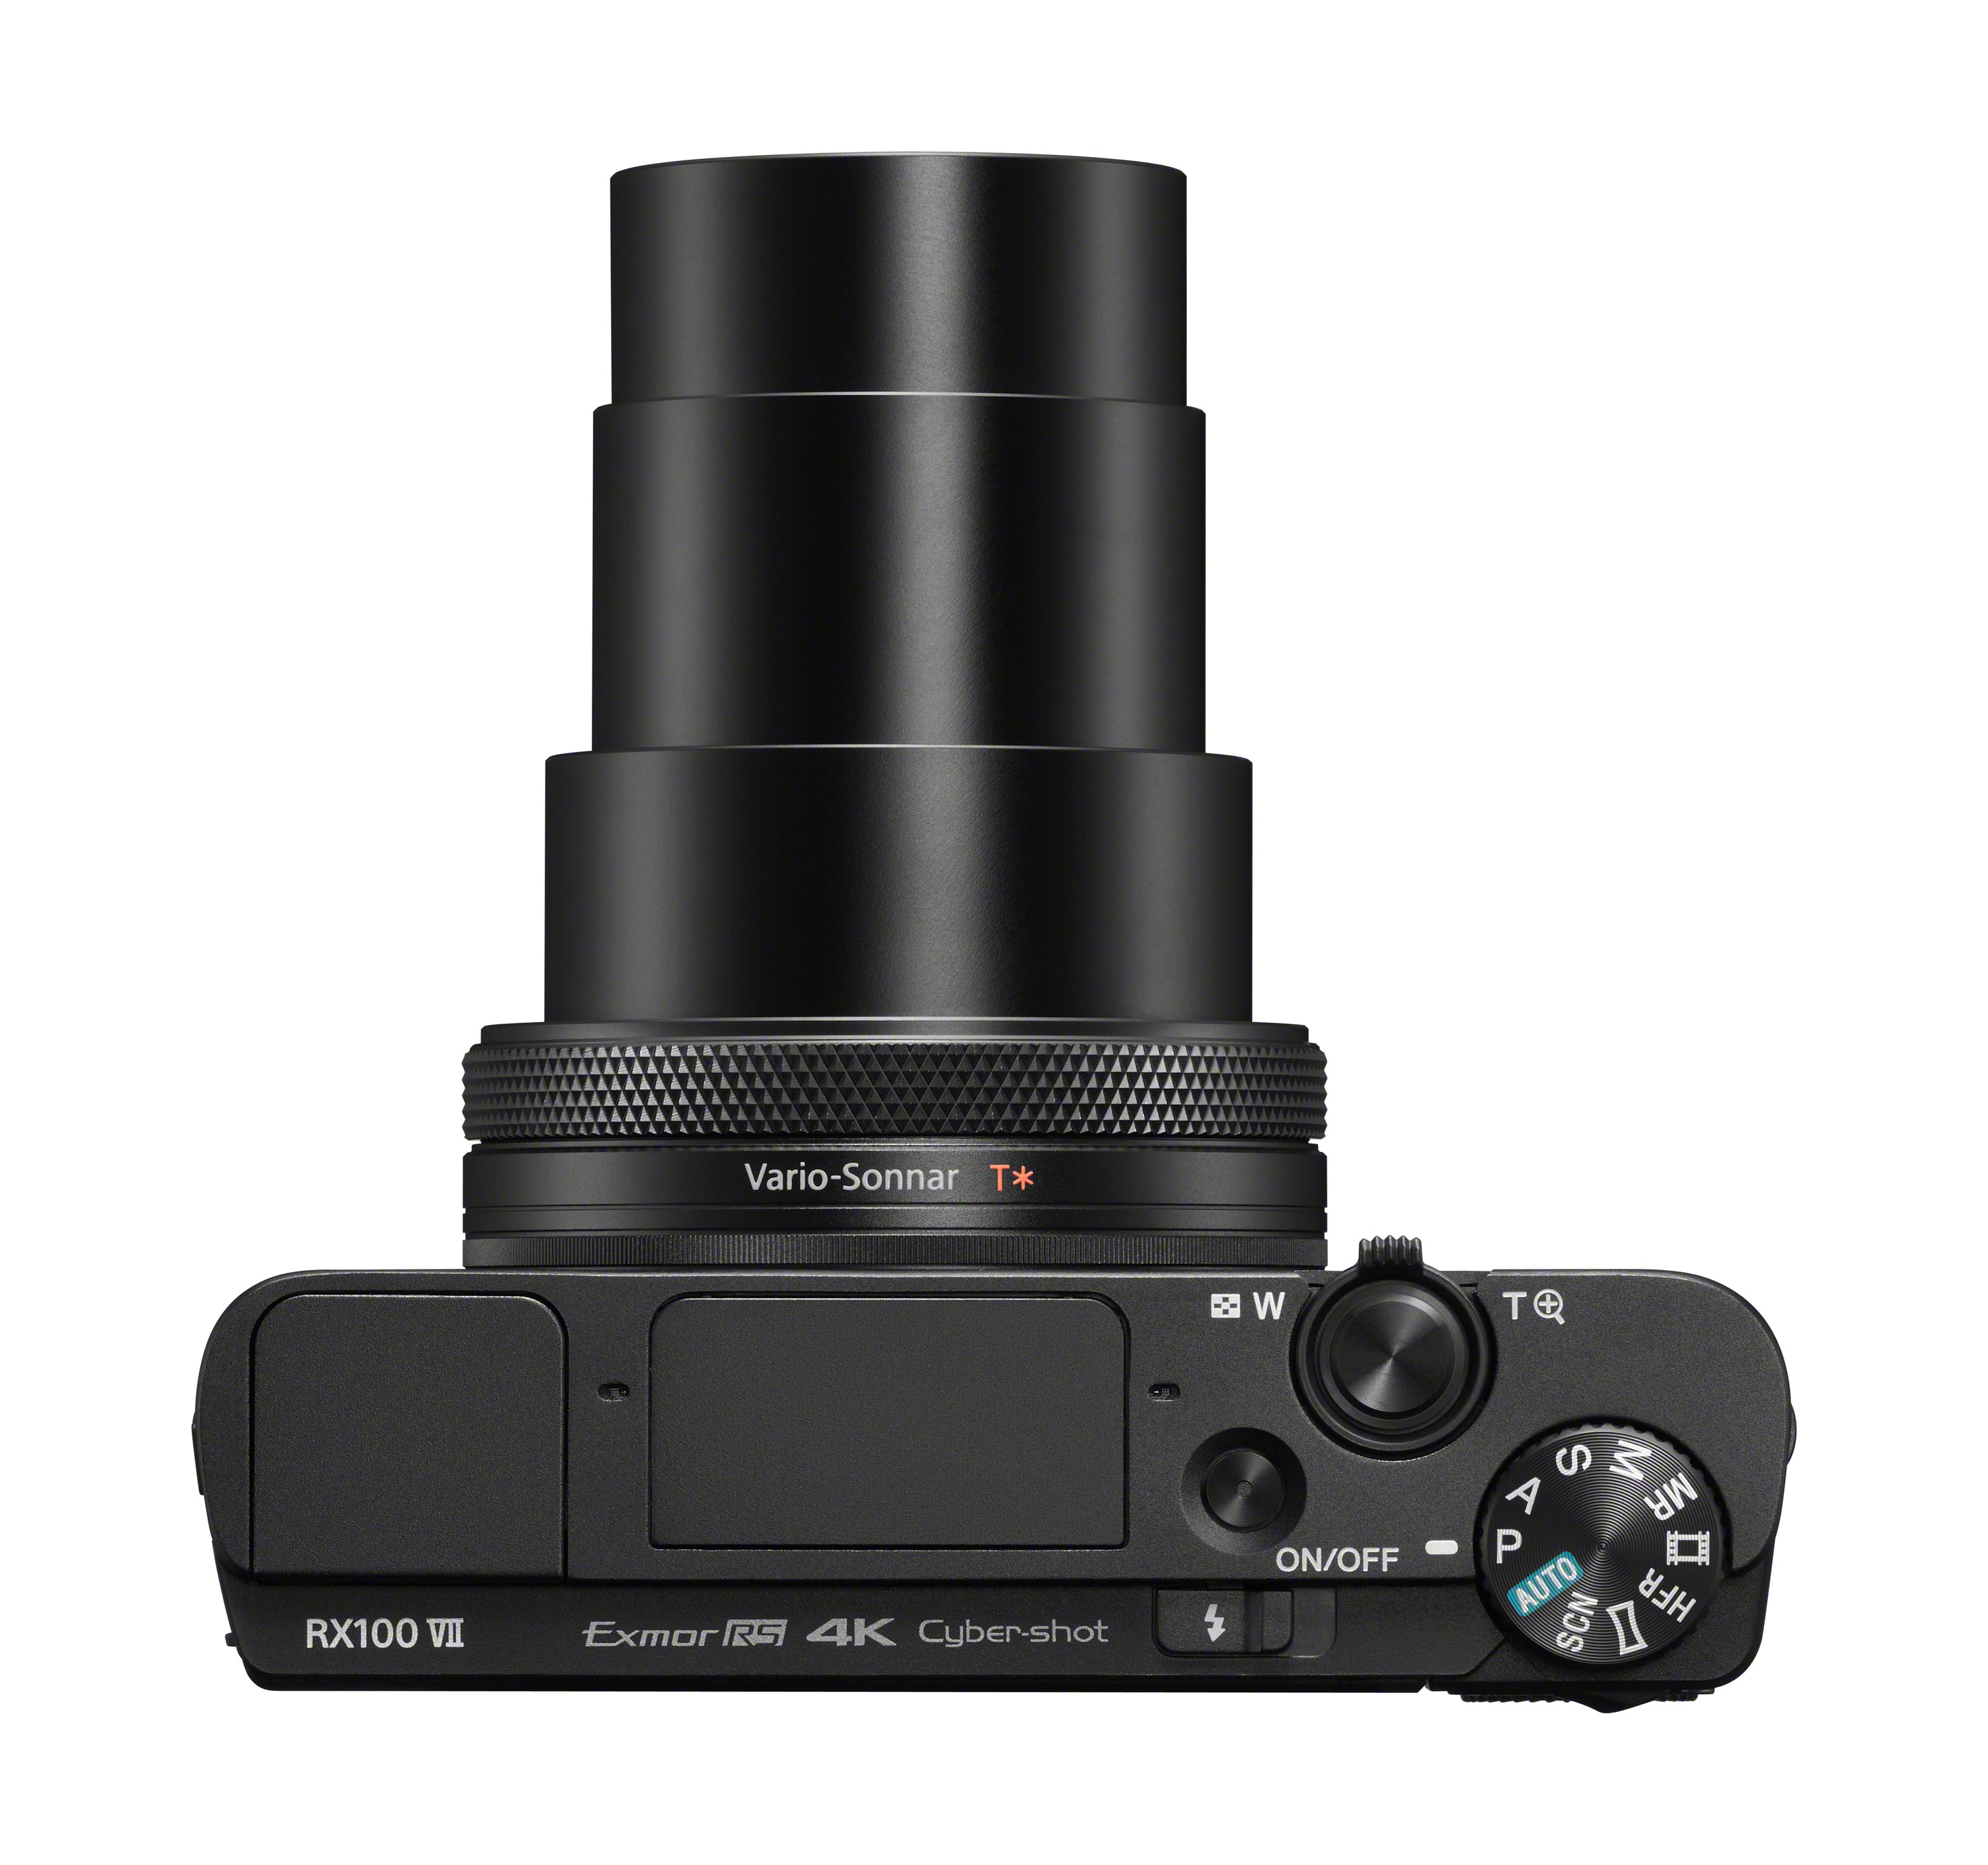 Sony Cyber Shot Dsc Rx100 Vii Digital Camera